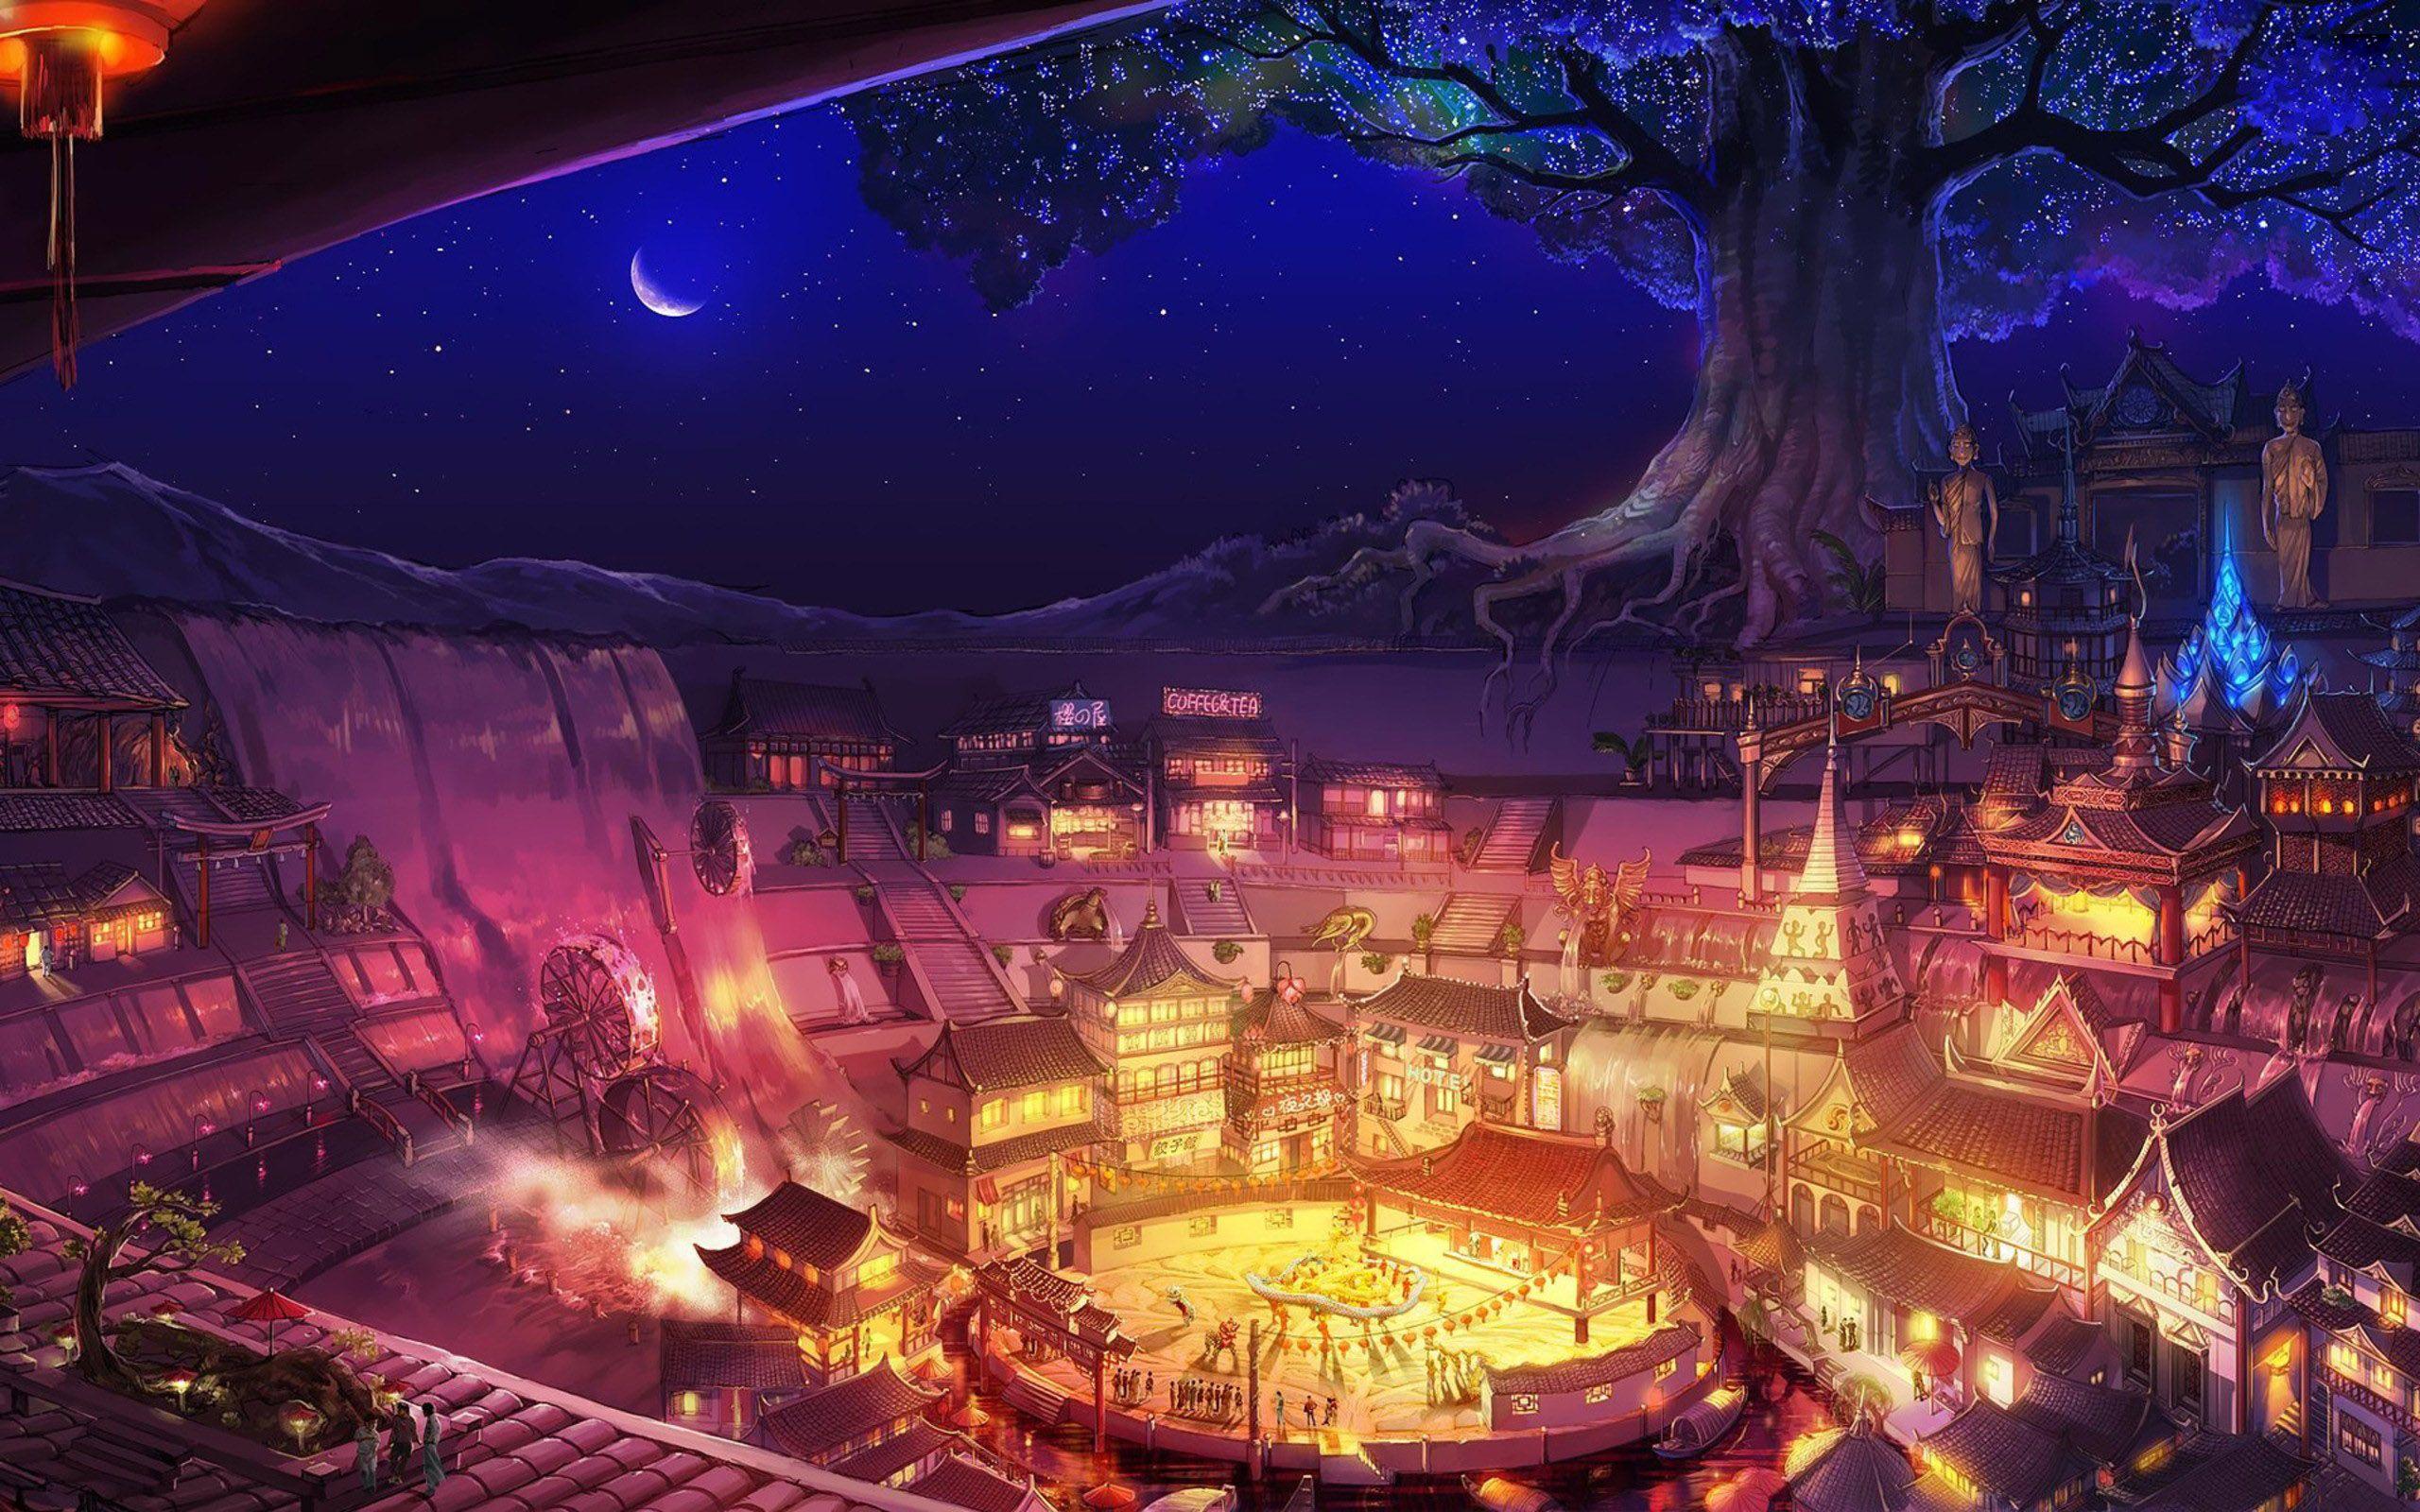 Wallpaper.wiki Arena Artwork Circus Fantasy Art Moon Night Trees PIC